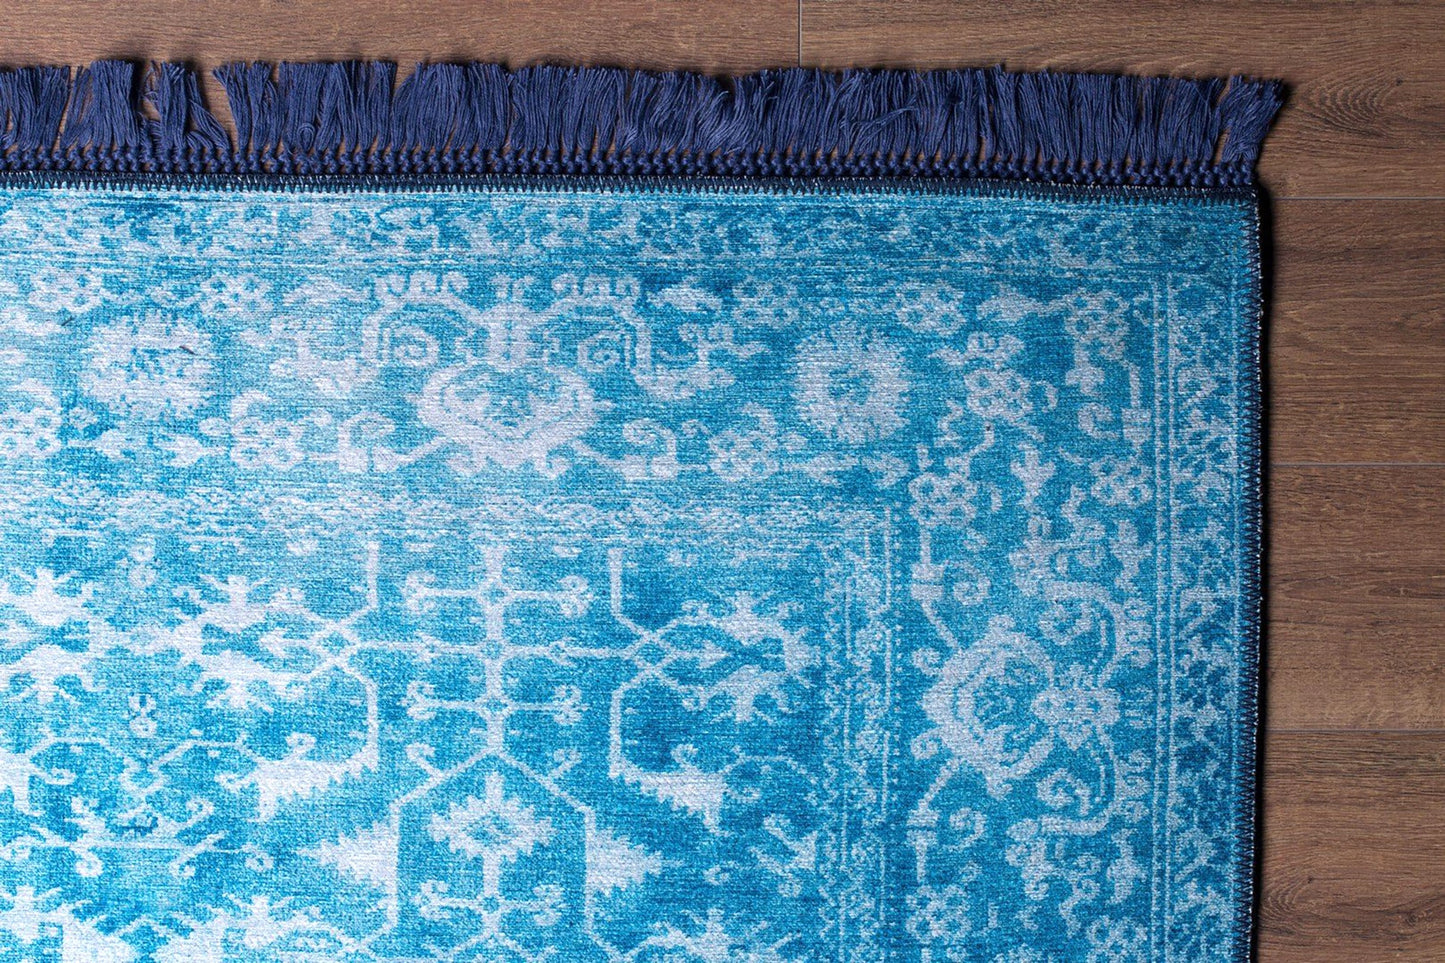 Mavi Persian Blue Teal Rug